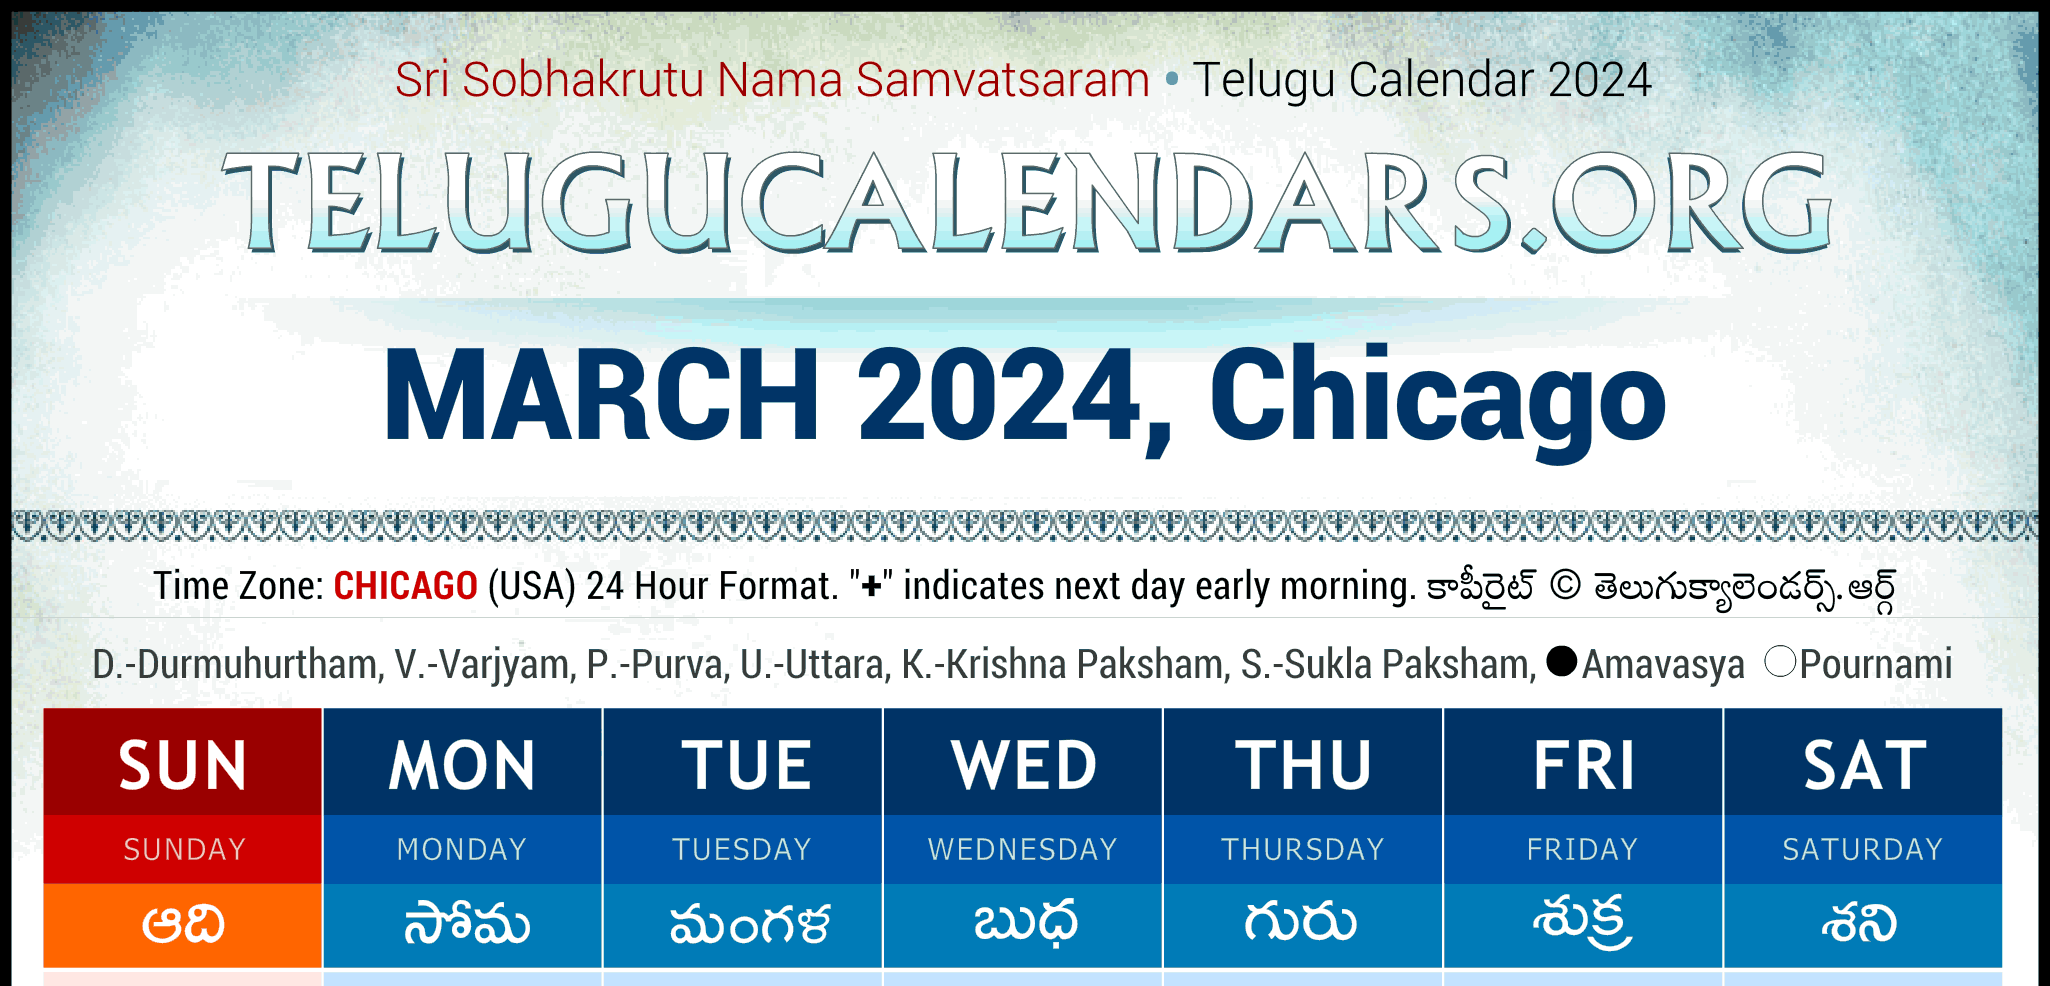 Telugu Calendar 2024 Chicago